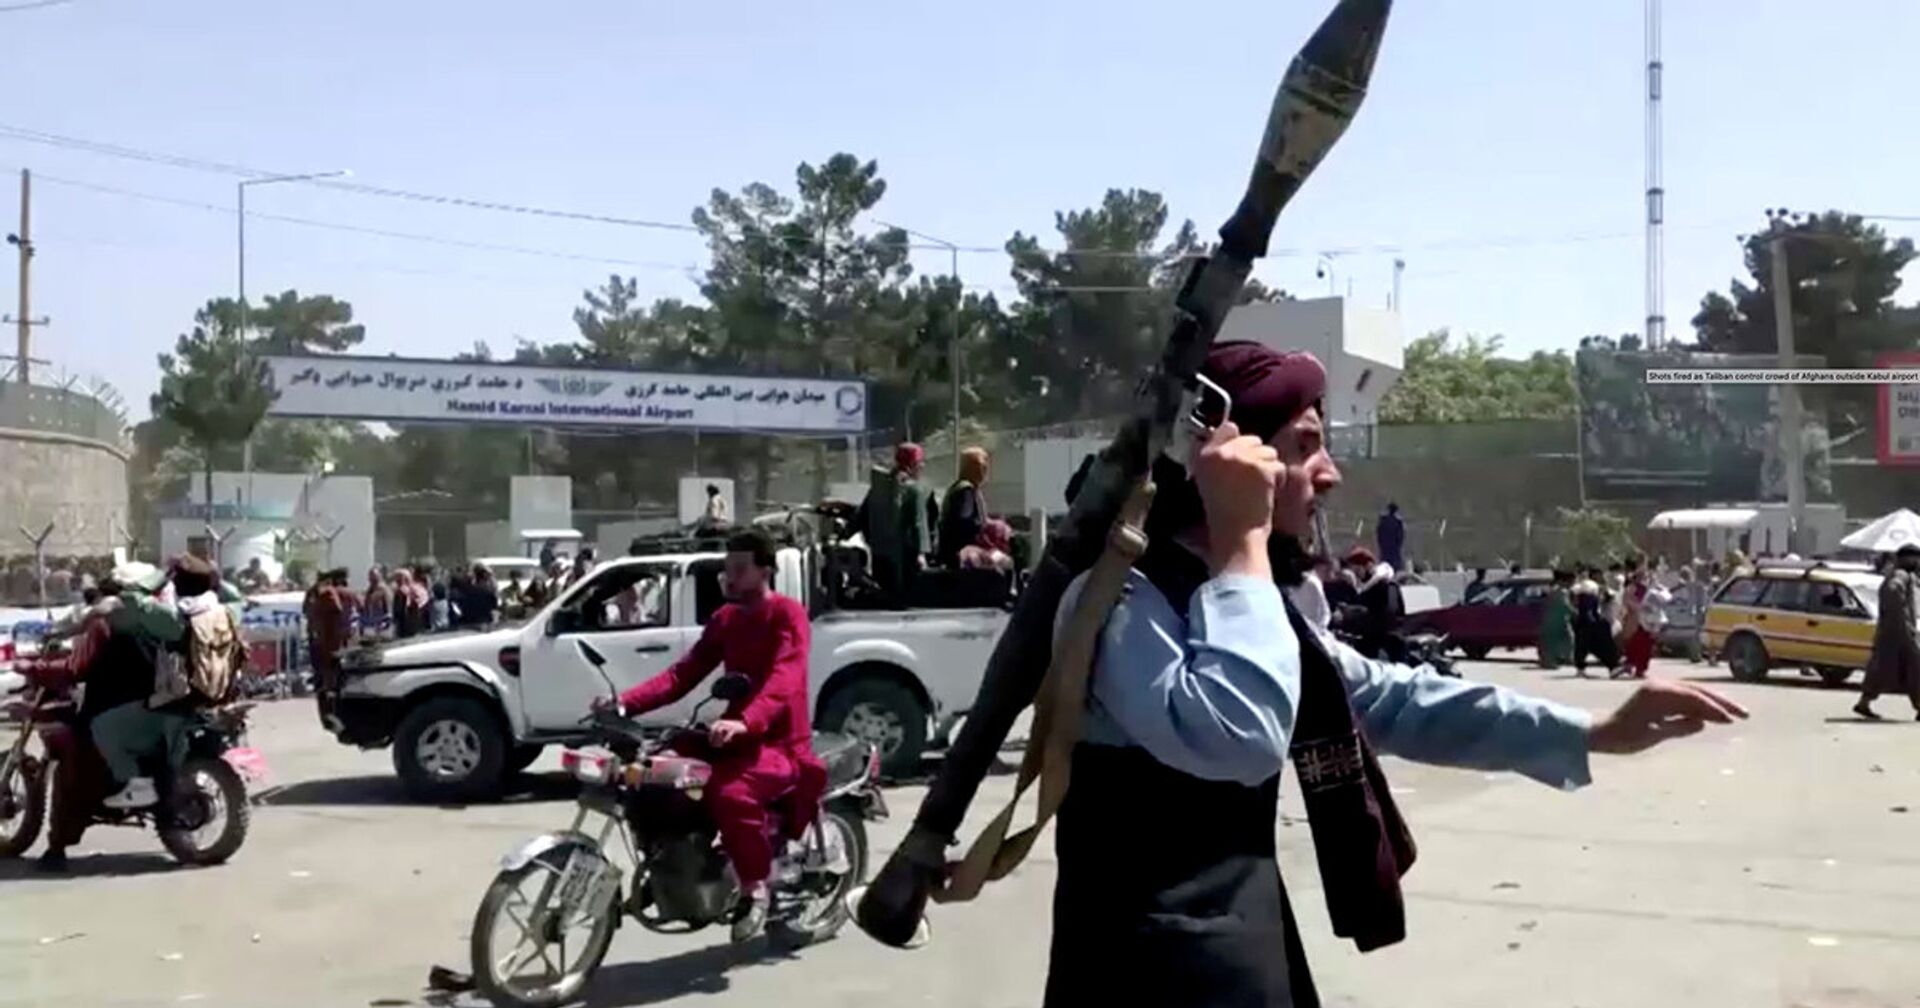 Боевики Талибана* в Кабуле, Афганистан - ИноСМИ, 1920, 18.08.2021